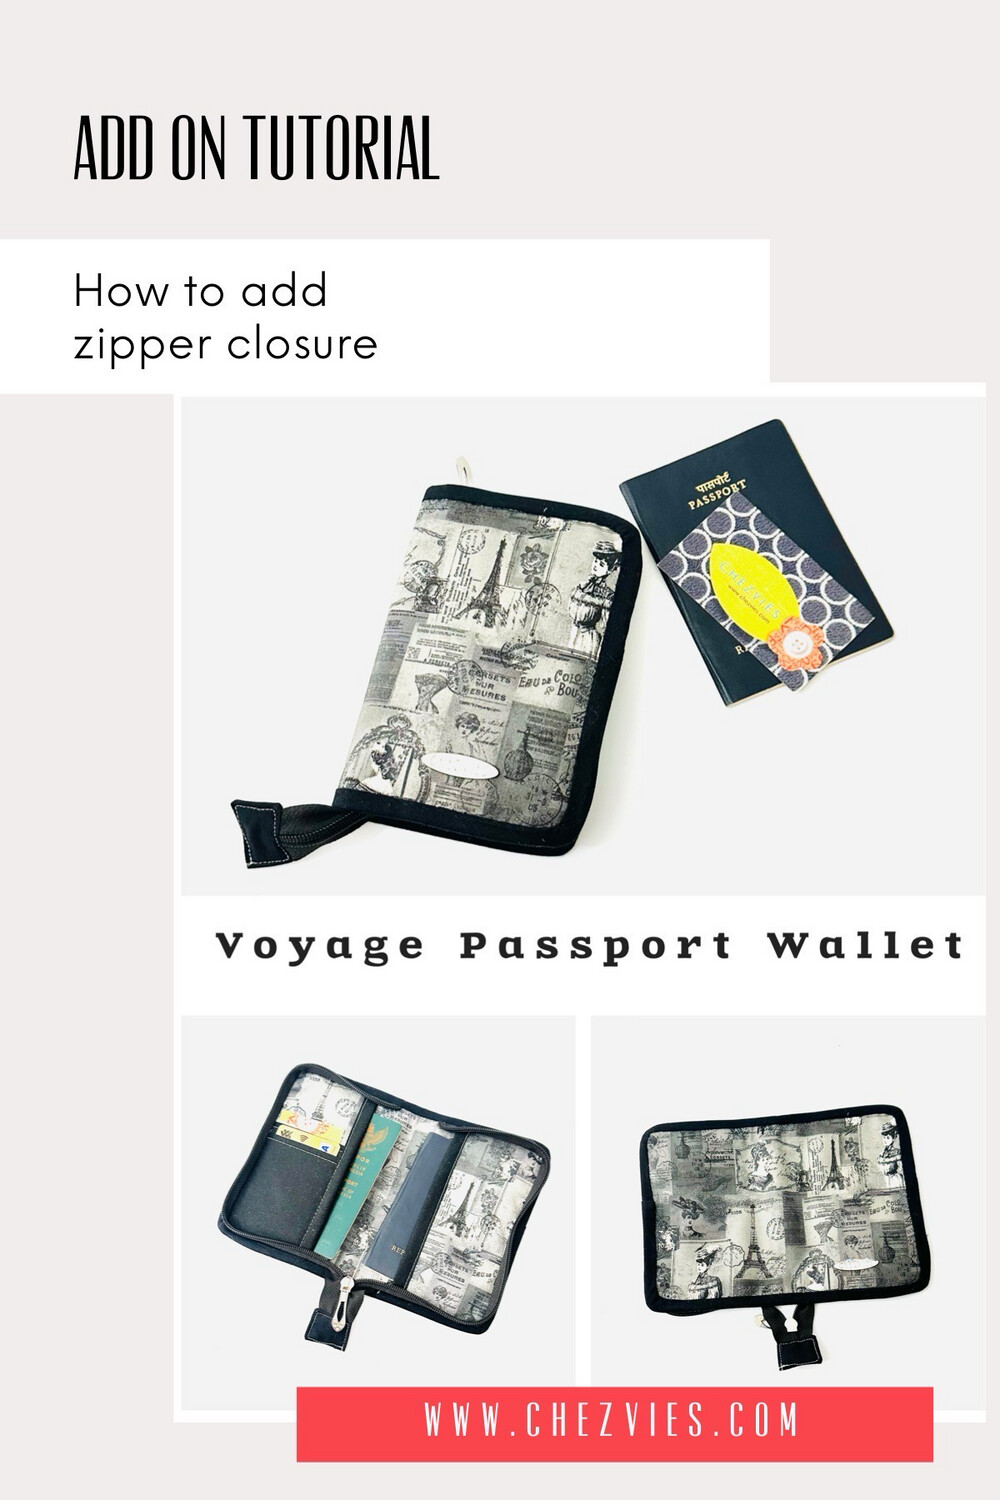 FREE - ADD ON TUTORIAL for Voyage Passport Wallet